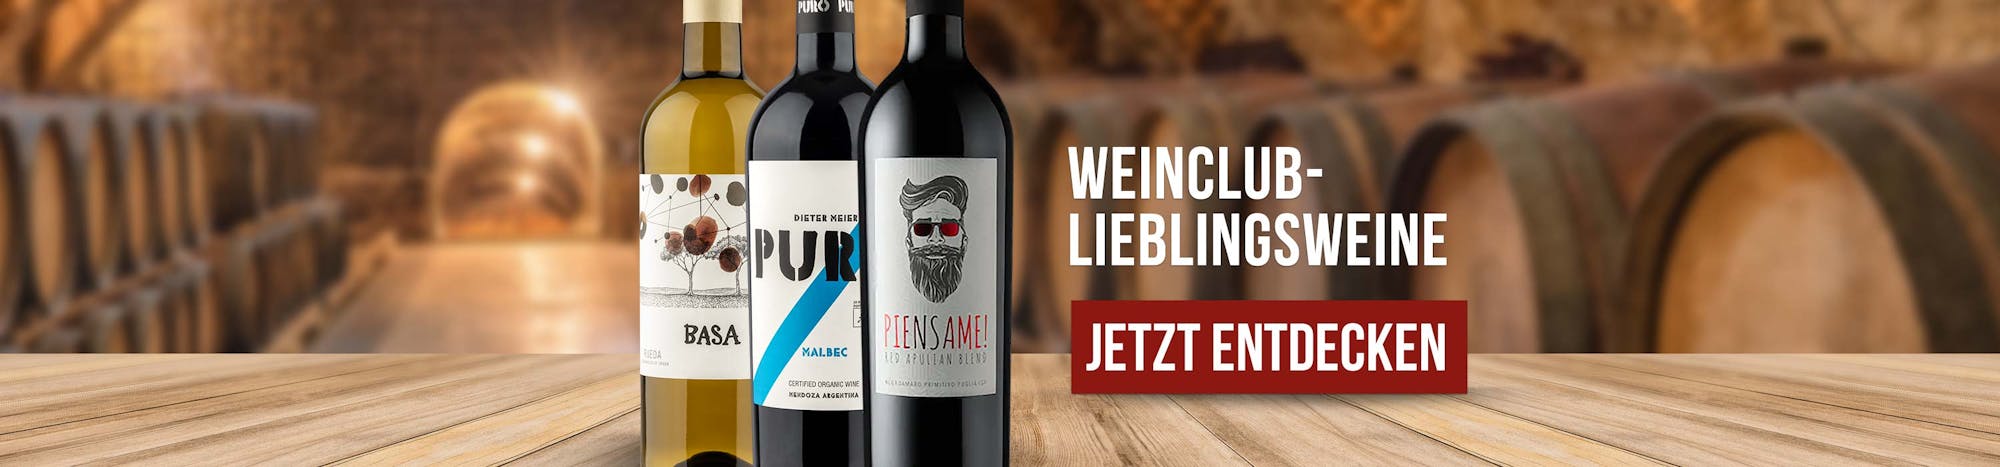 Weinclub-Lieblingsweine